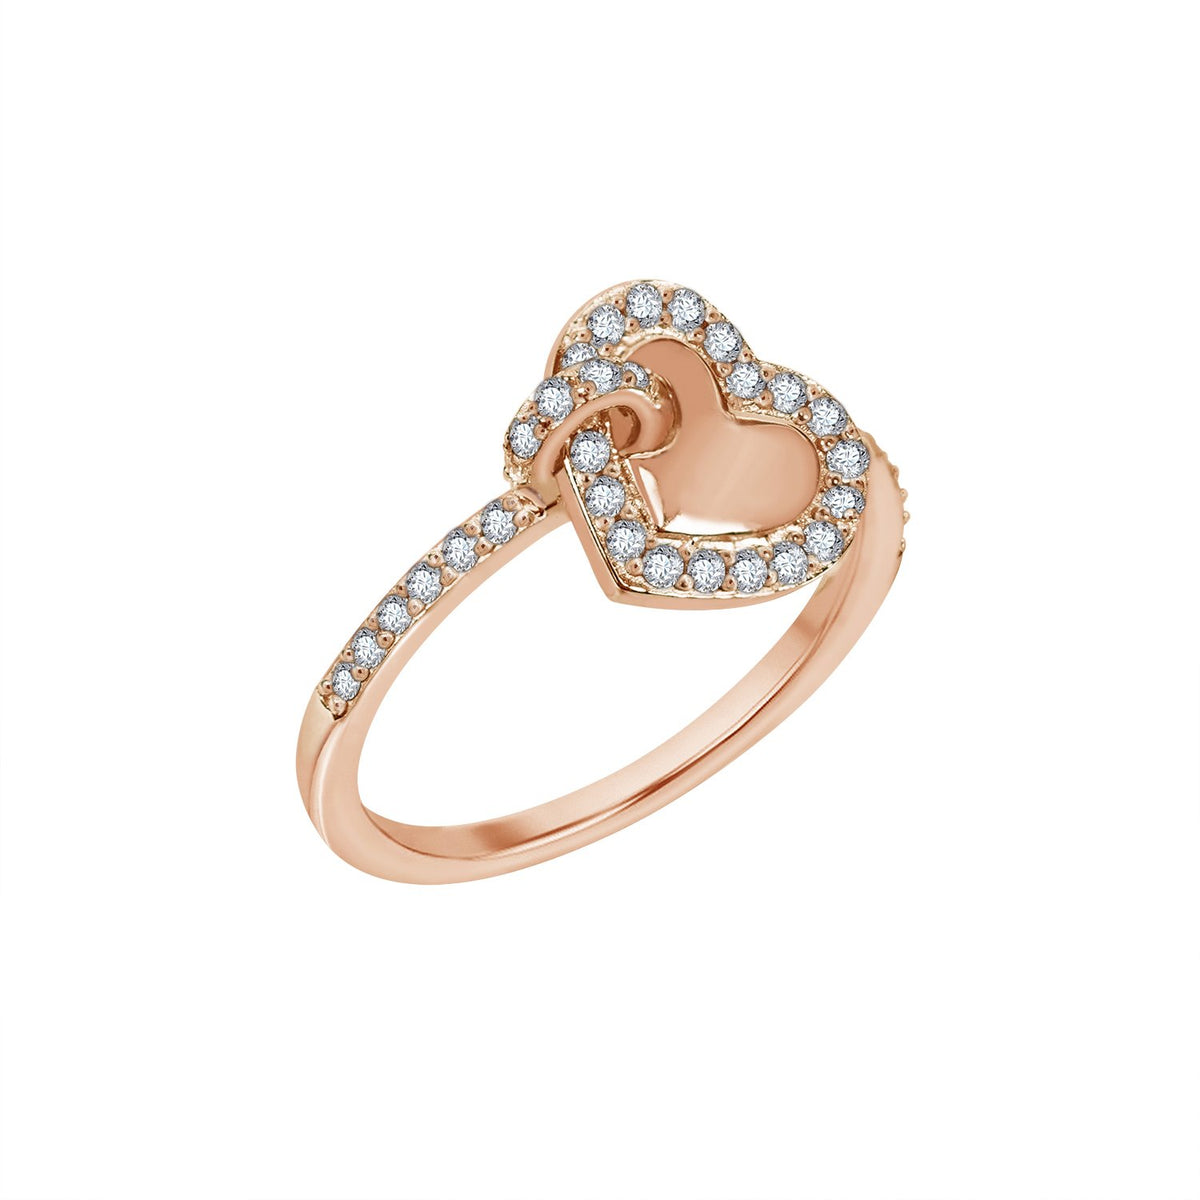 GEMOUR 14K Rose Gold Clad Sterling Silver Interlocking Heart Circle Ring